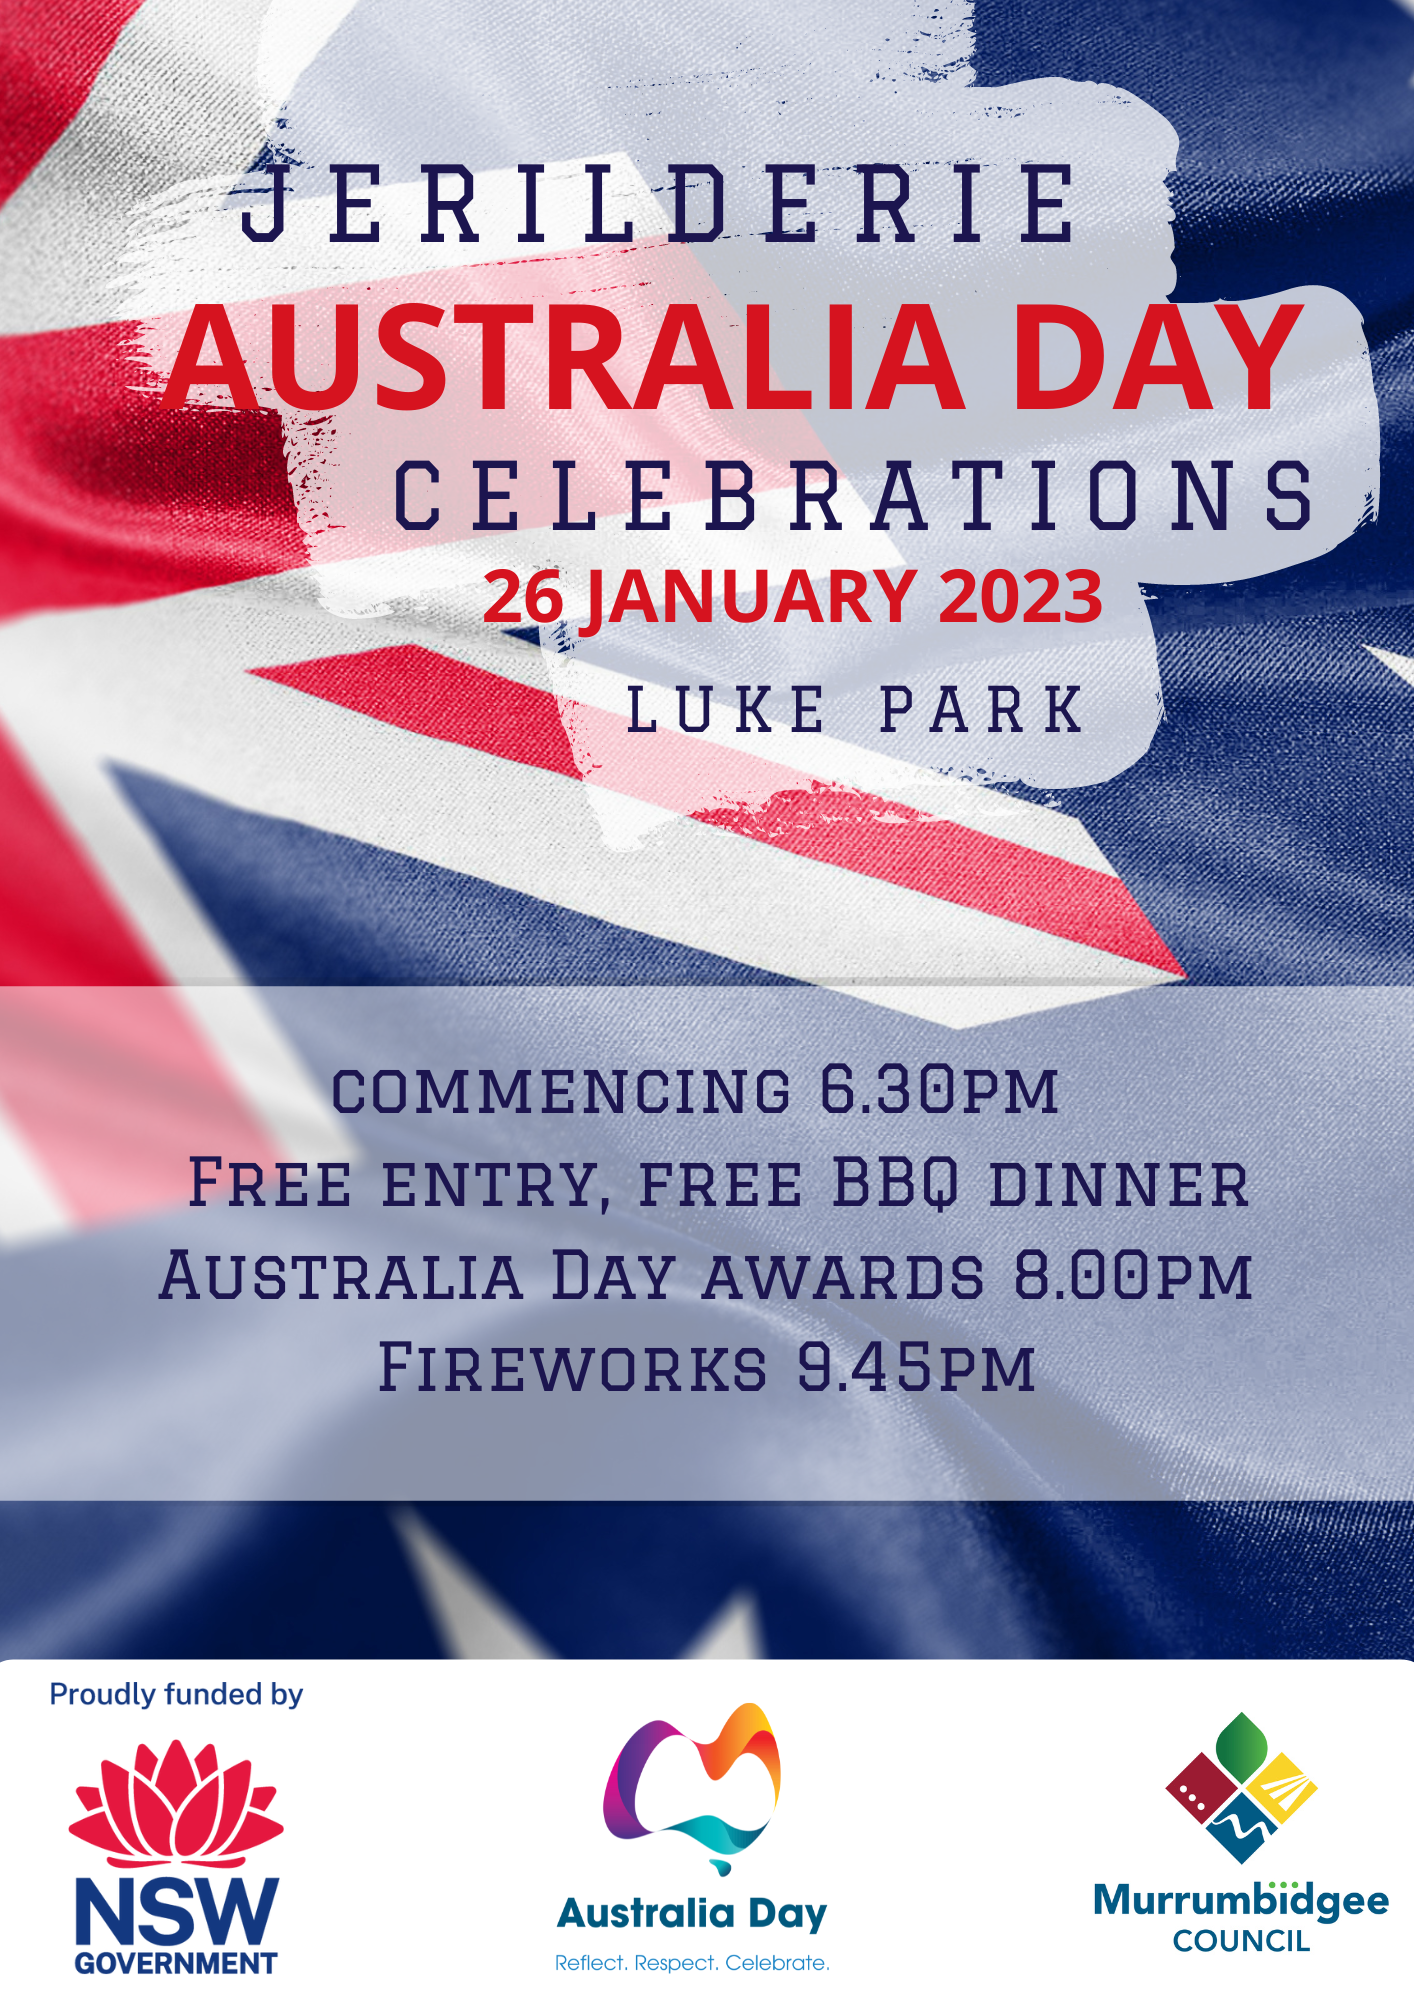 Jerilderie Australia Day Celebrations & Fireworks